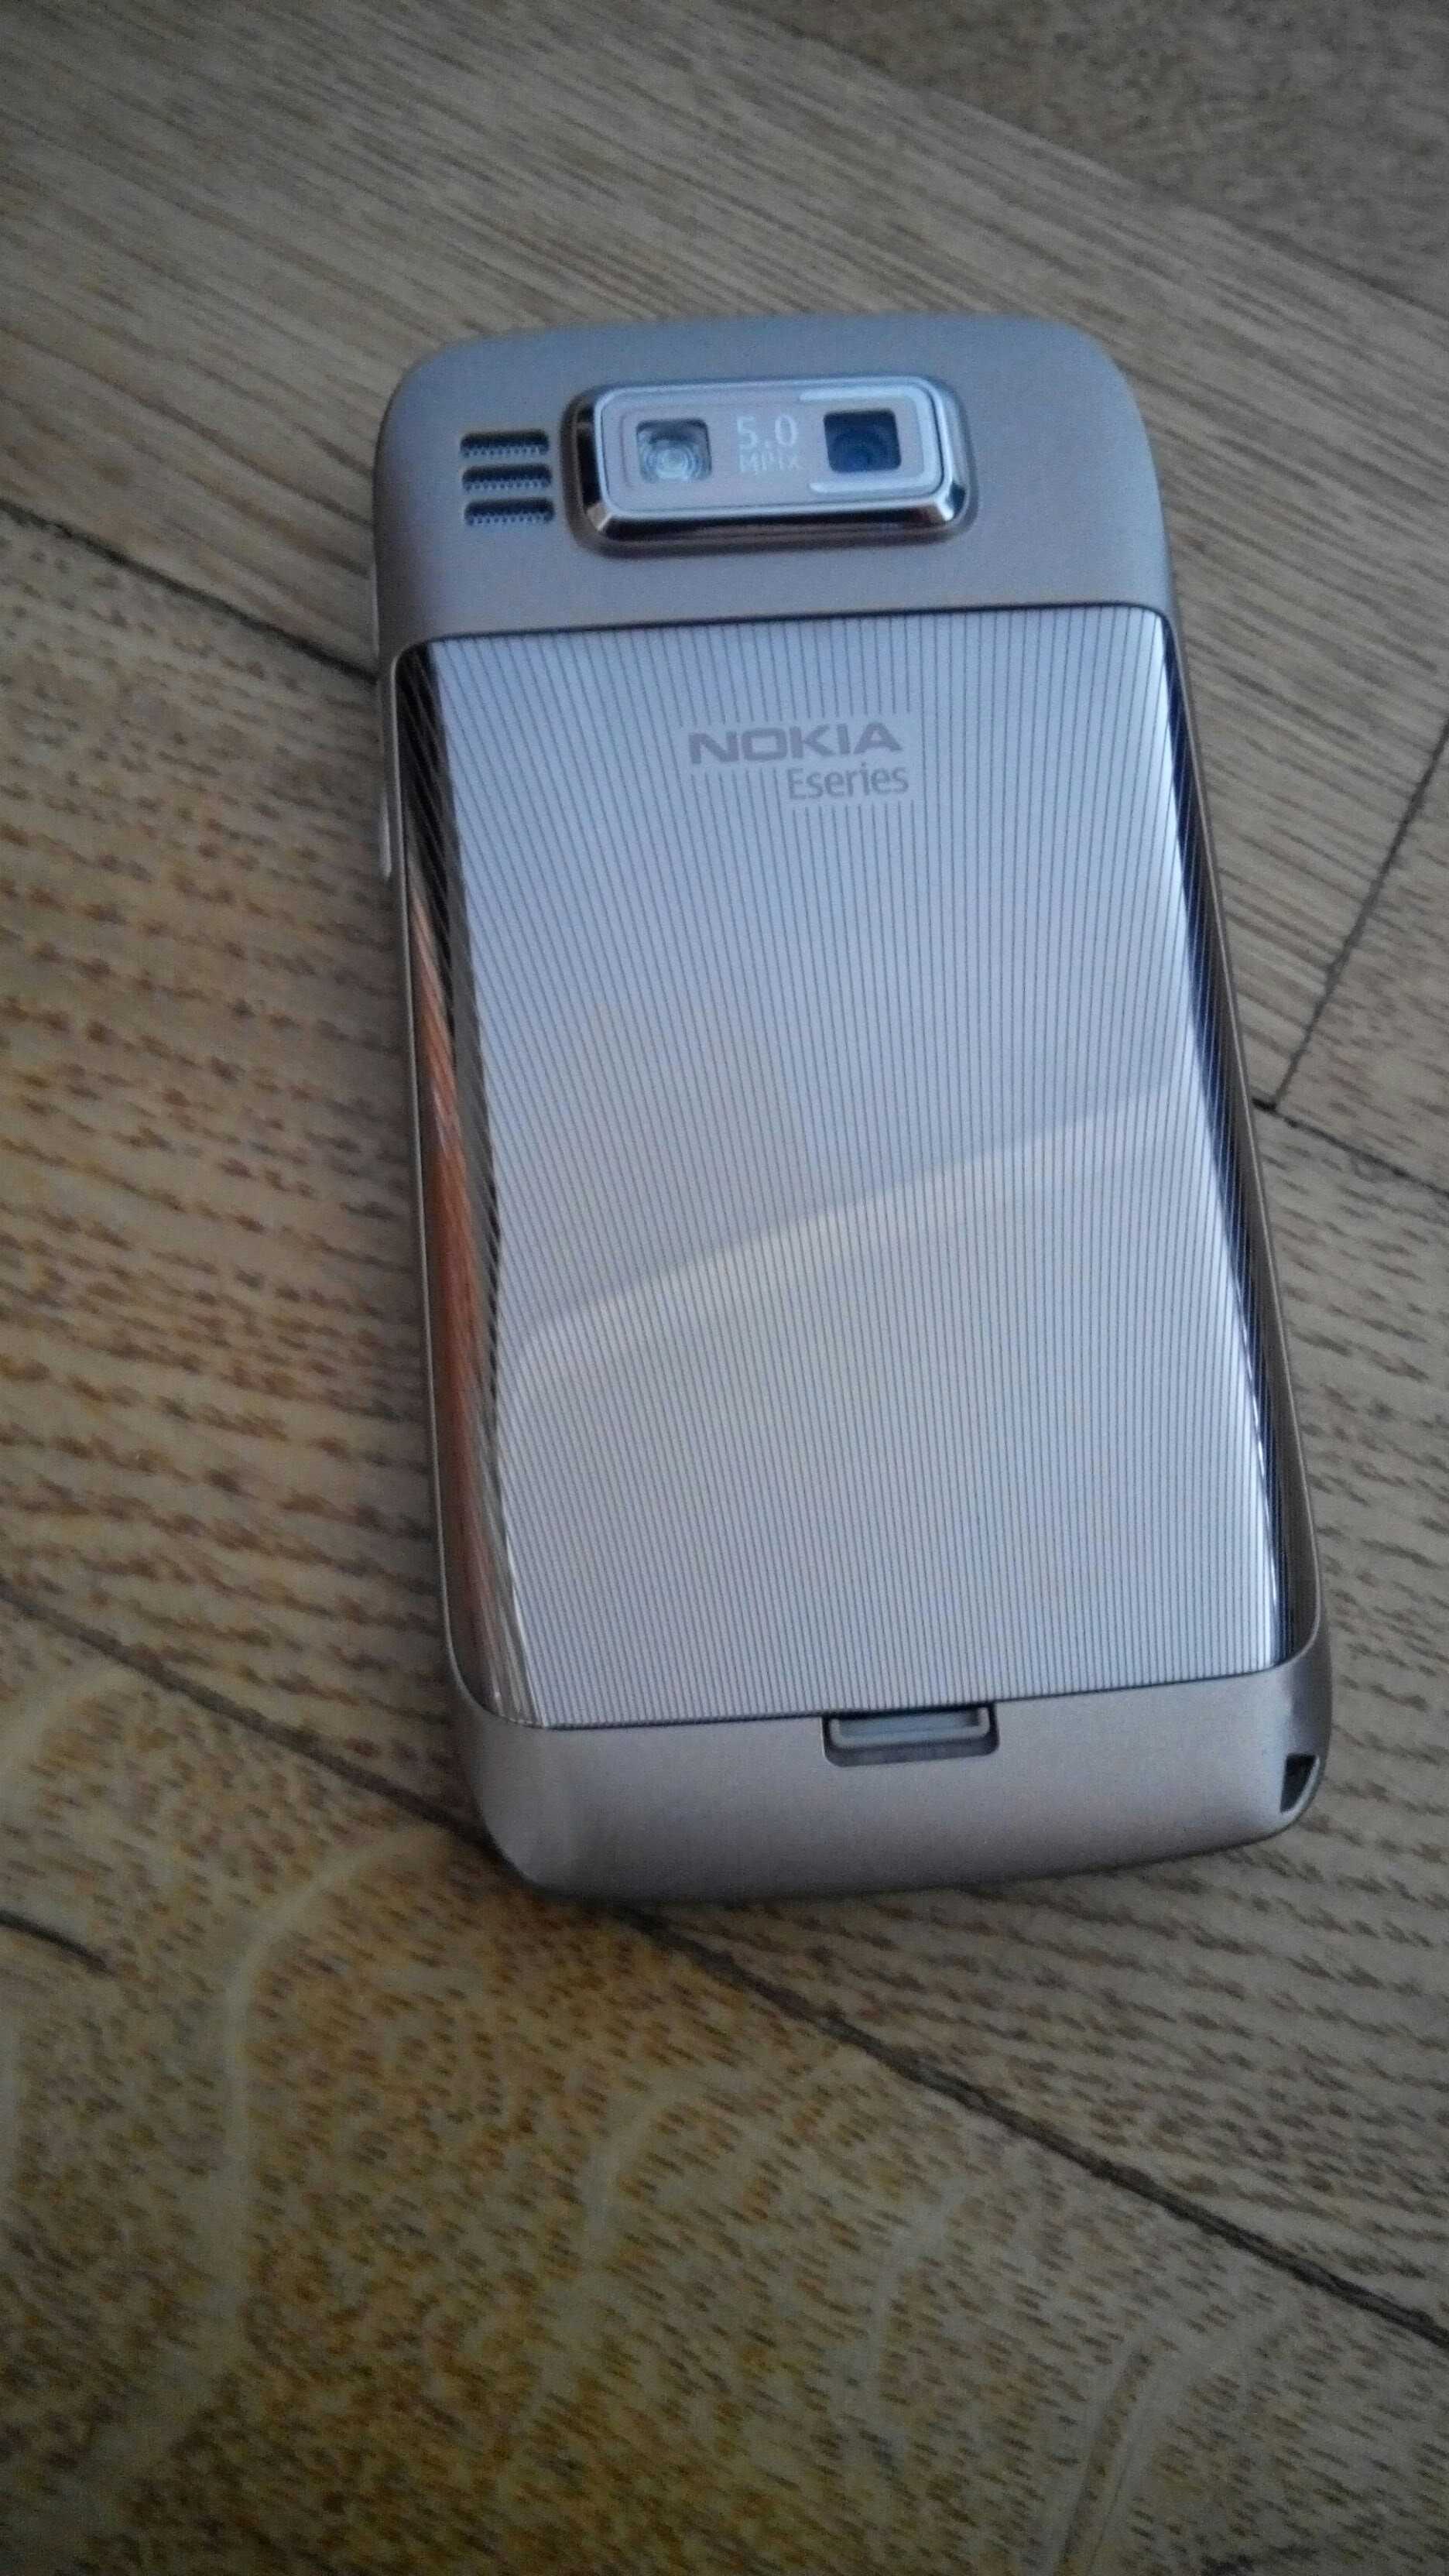 Телефон Nokia E 72